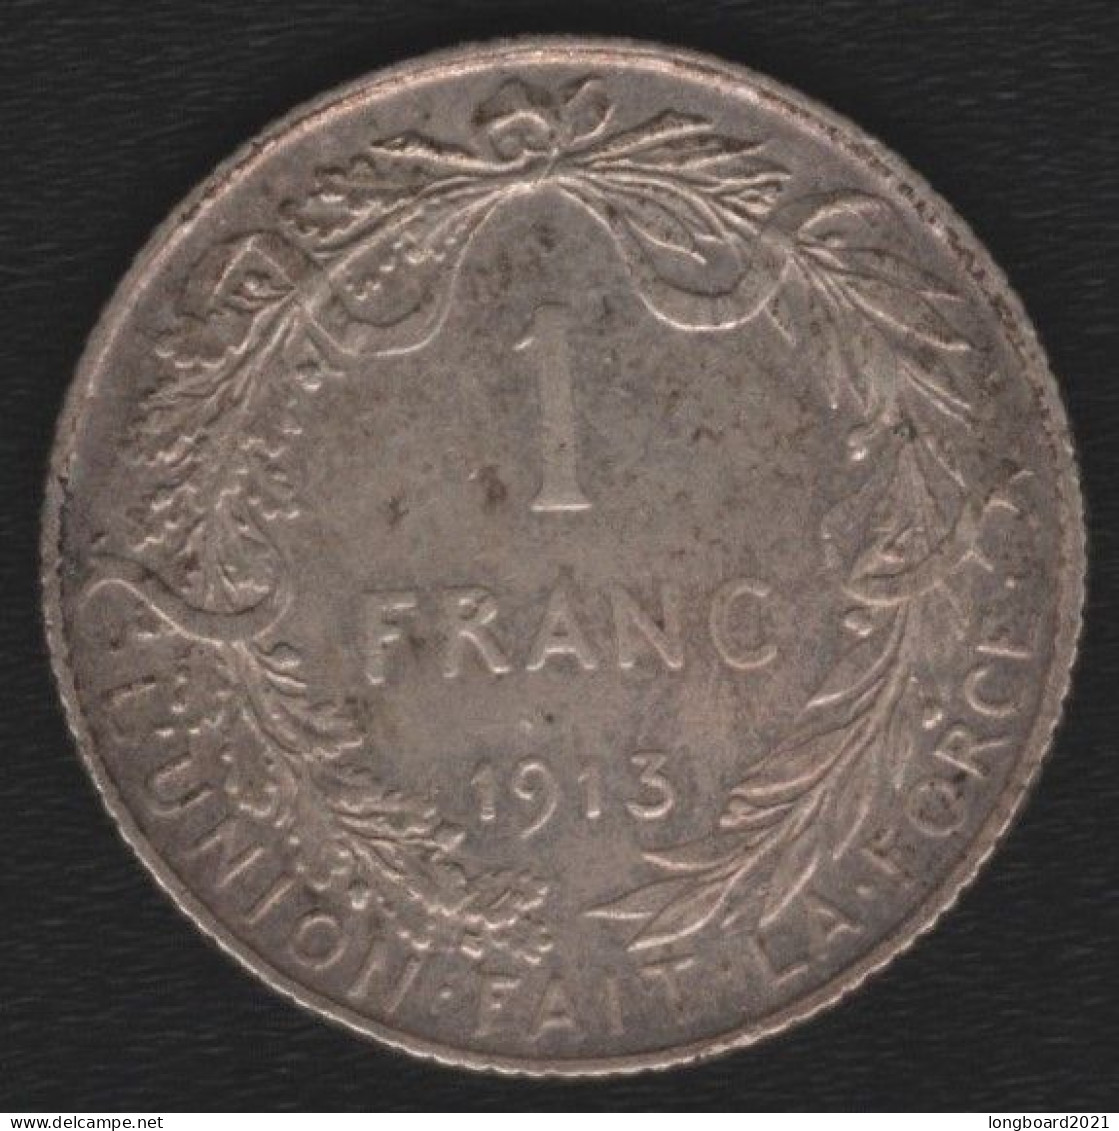 BELGIUM - 1 FRANC 1913 French -SILVER- - 1 Franc